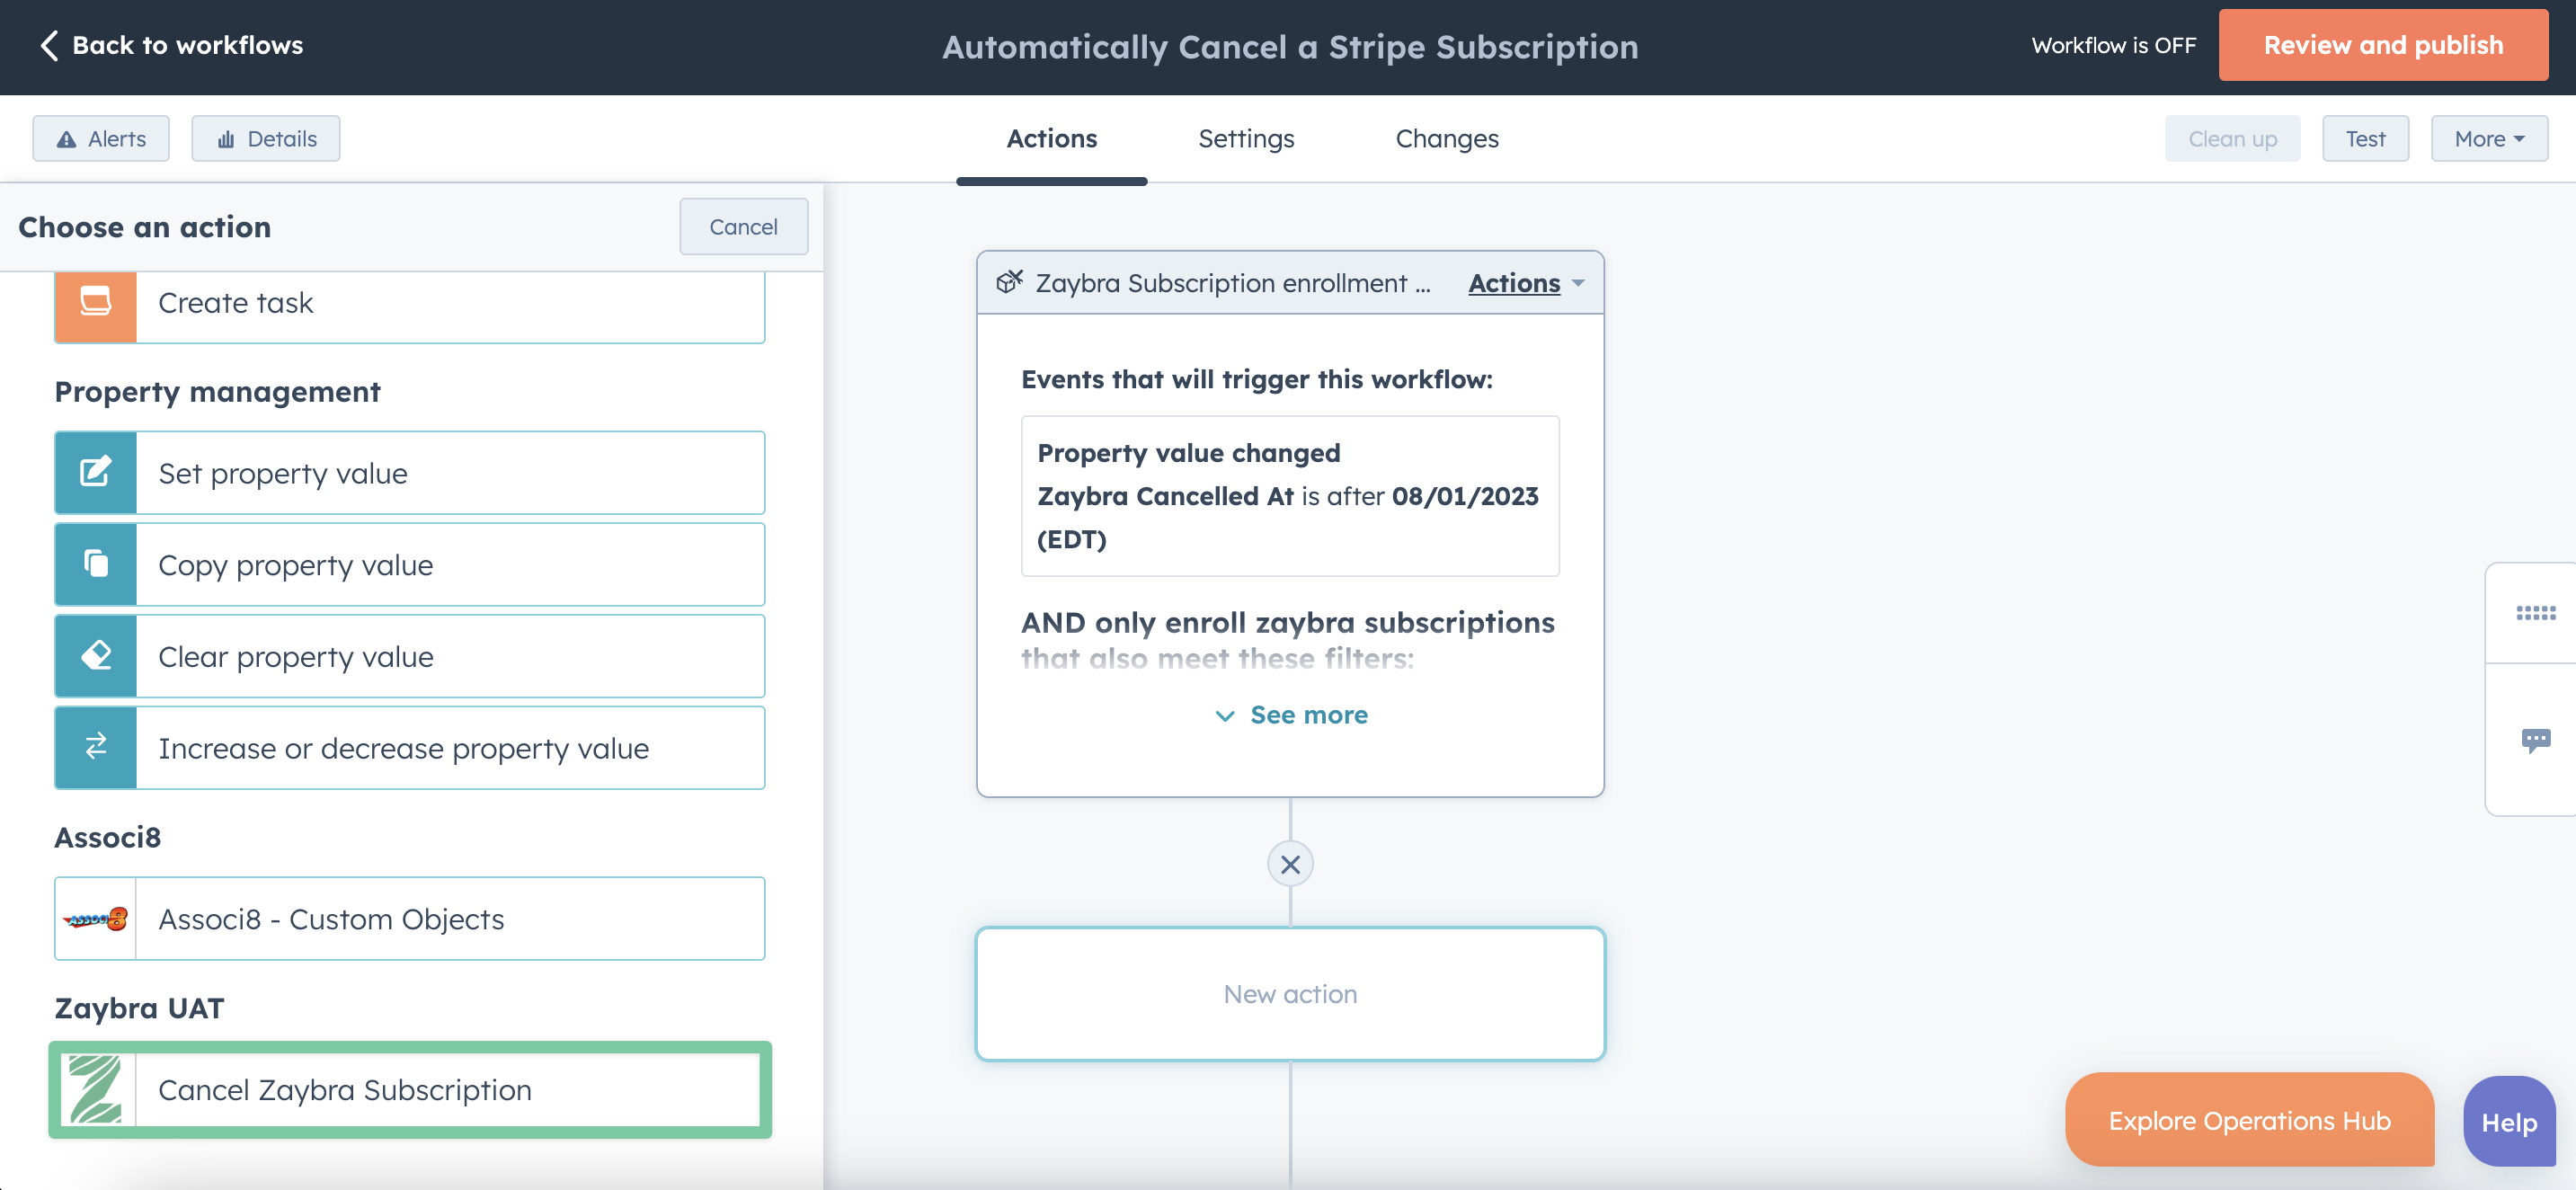 How to cancel a Zaybra subscription automatically